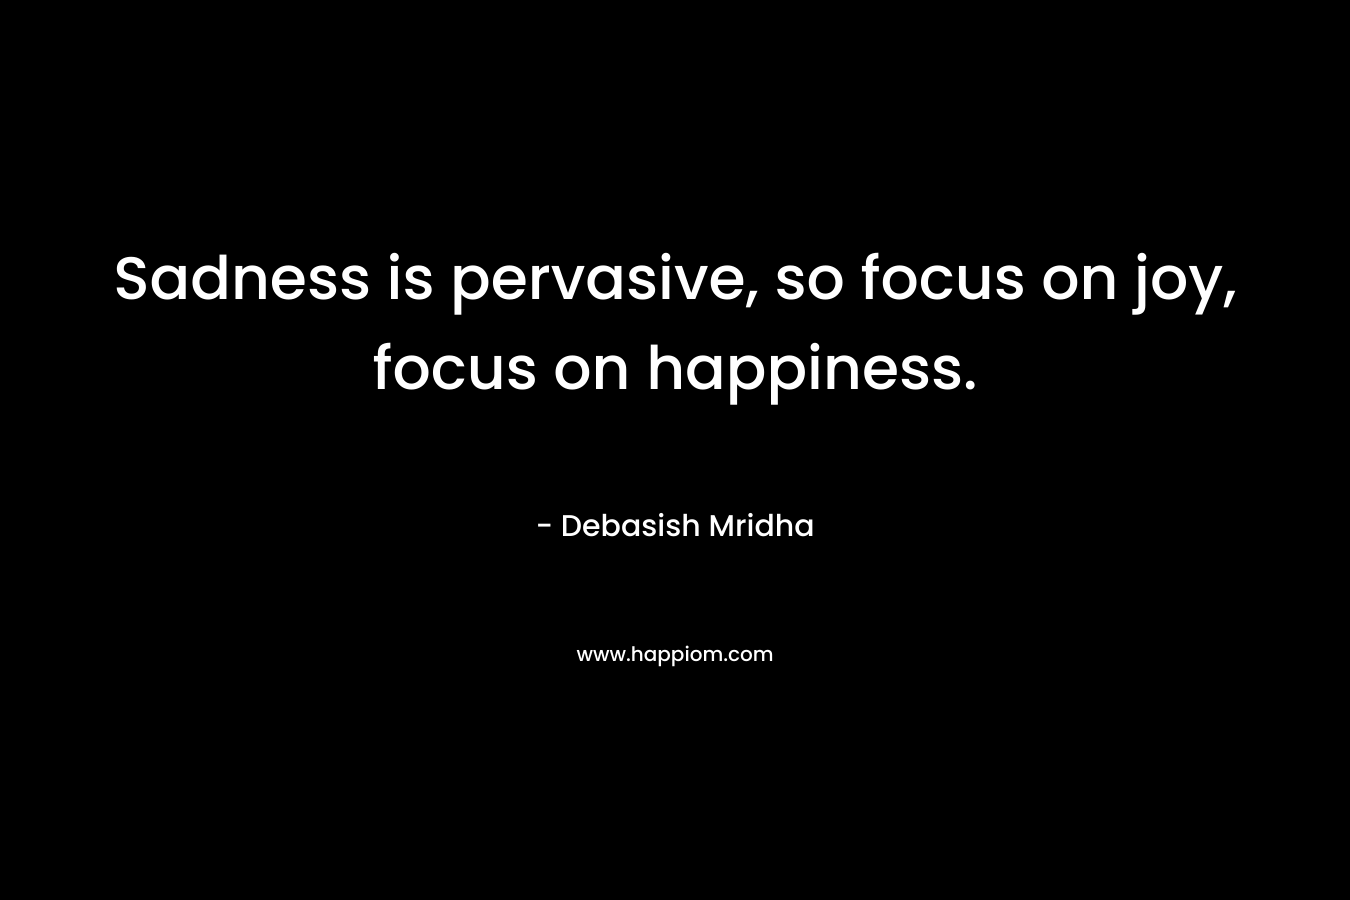 Sadness is pervasive, so focus on joy, focus on happiness.